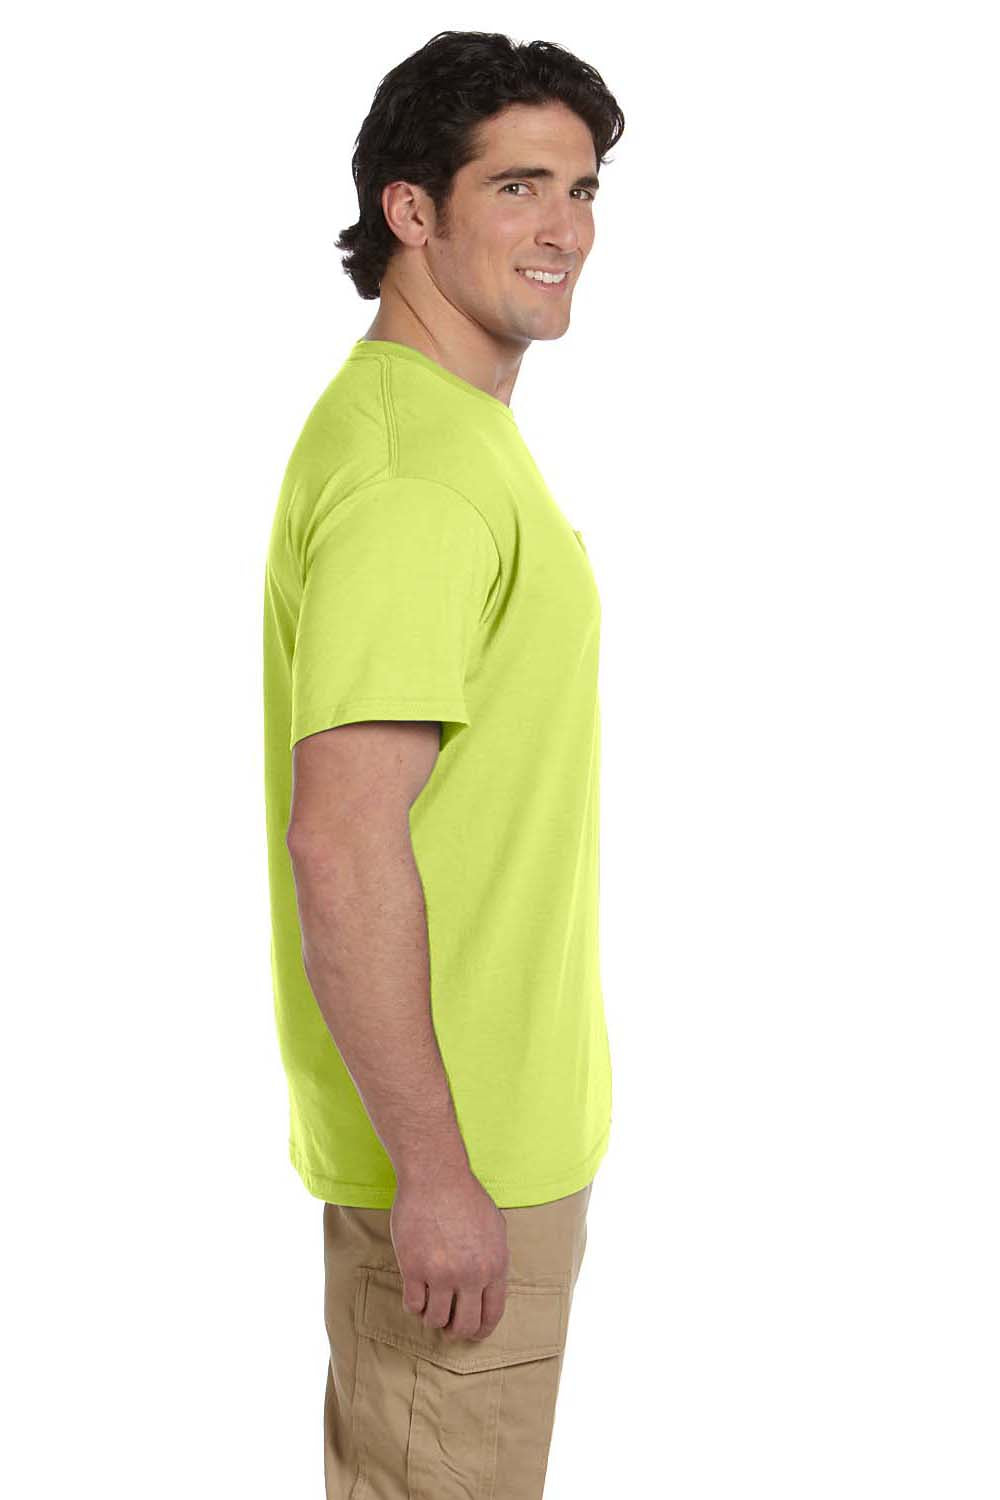 Jerzees 29P Mens Dri-Power Moisture Wicking Short Sleeve Crewneck T-Shirt w/ Pocket Safety Green Side